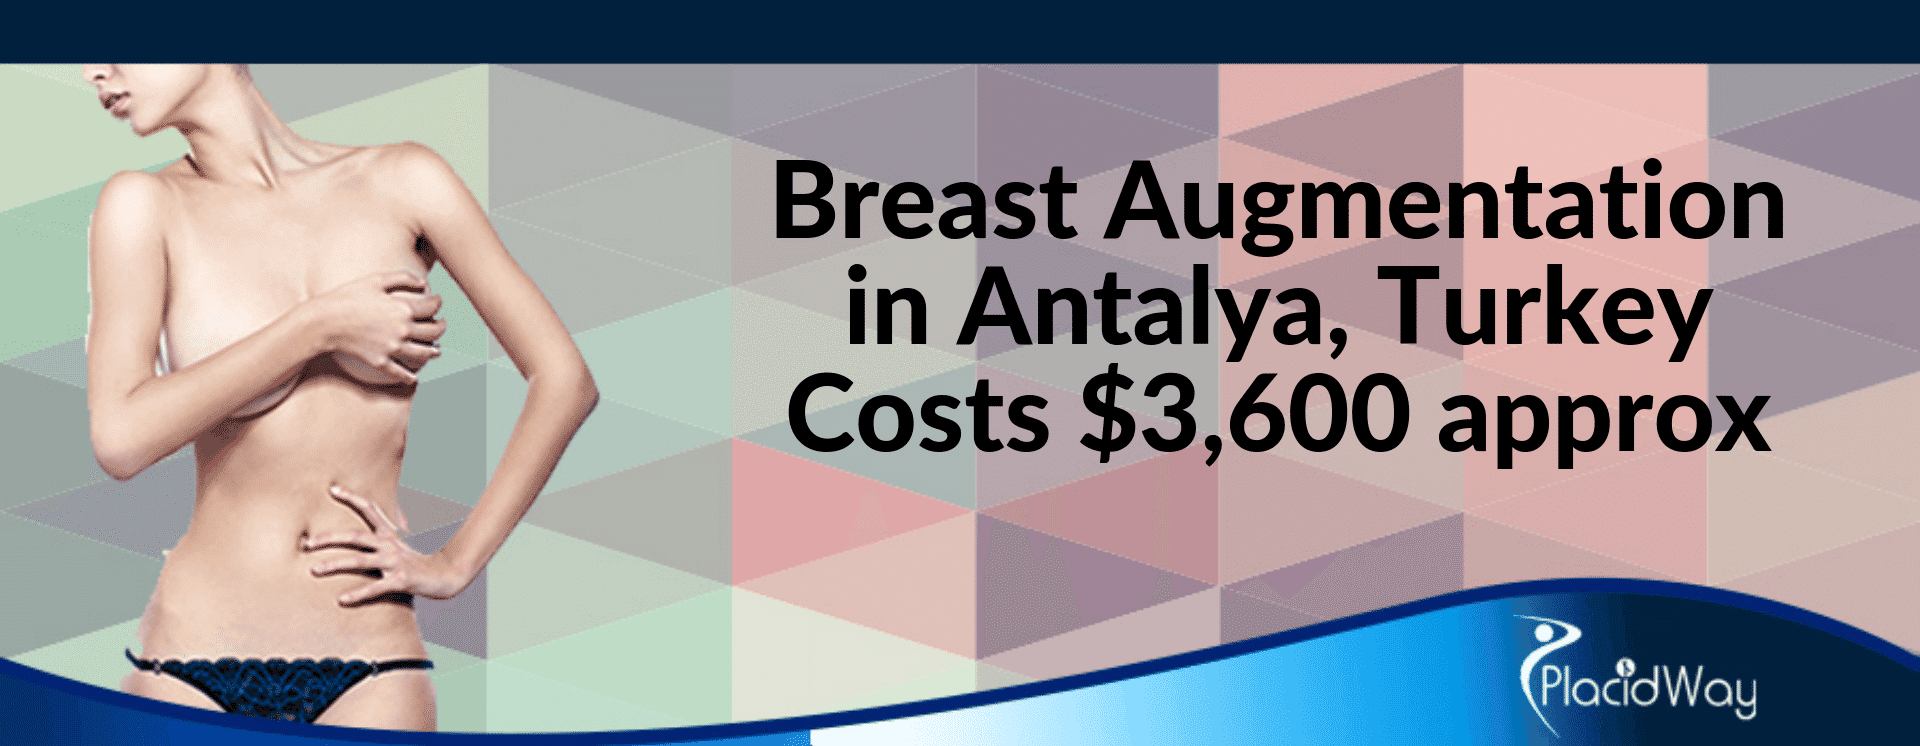 Breast Augmentation Cost Turkey